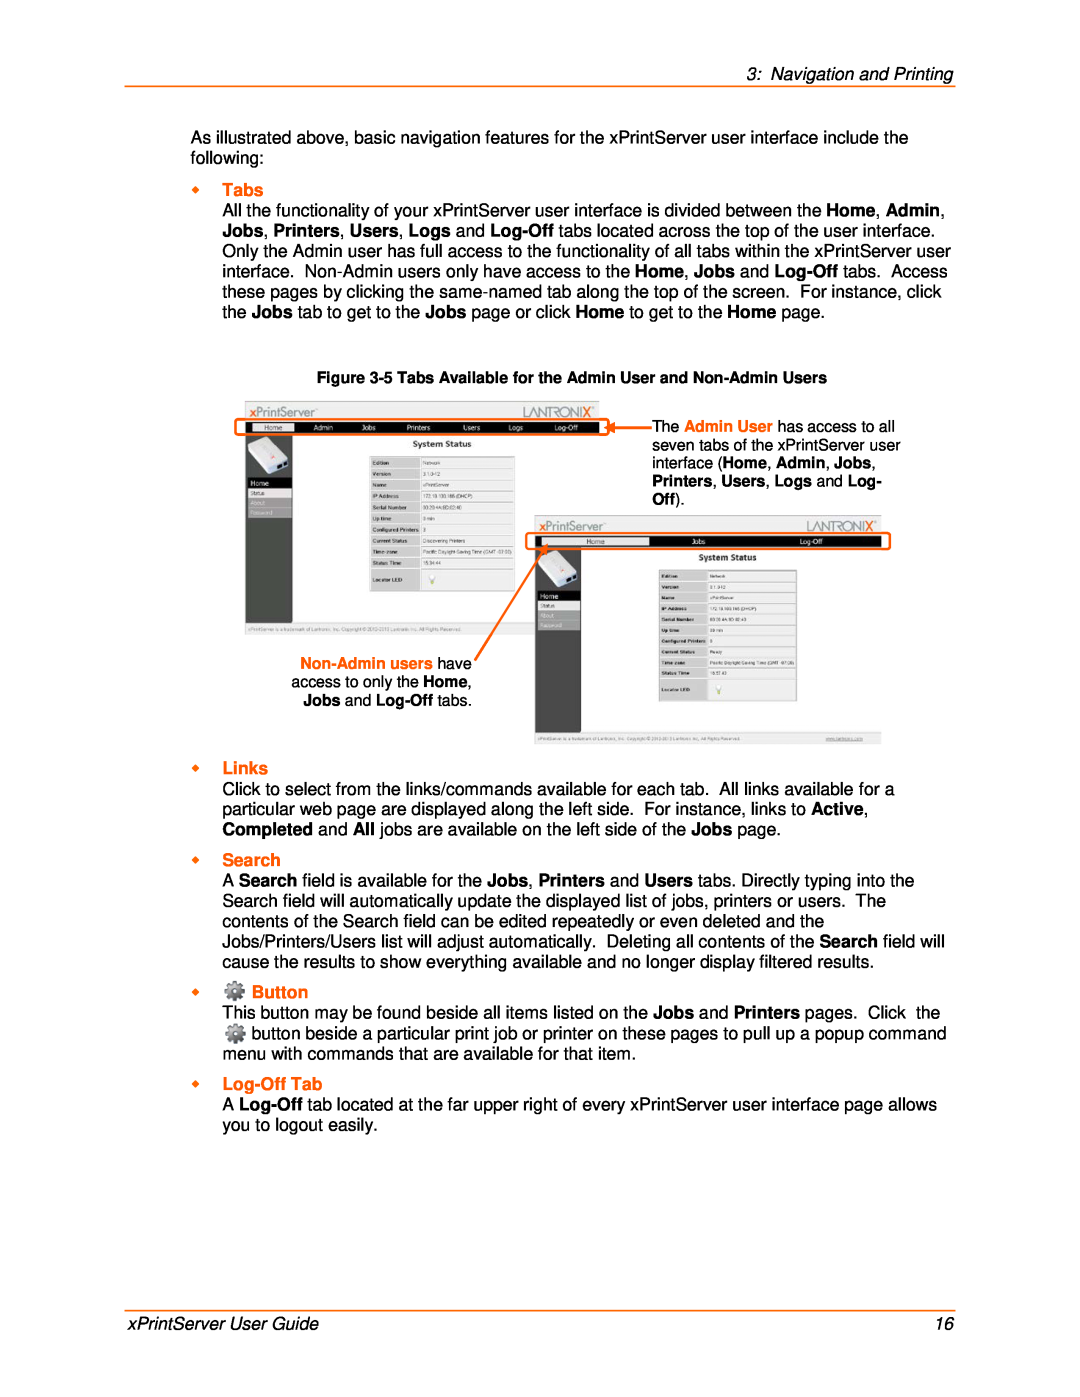 Lantronix 900-603  Tabs,  Links,  Search,  Button,  Log-Off Tab, Navigation and Printing, xPrintServer User Guide 